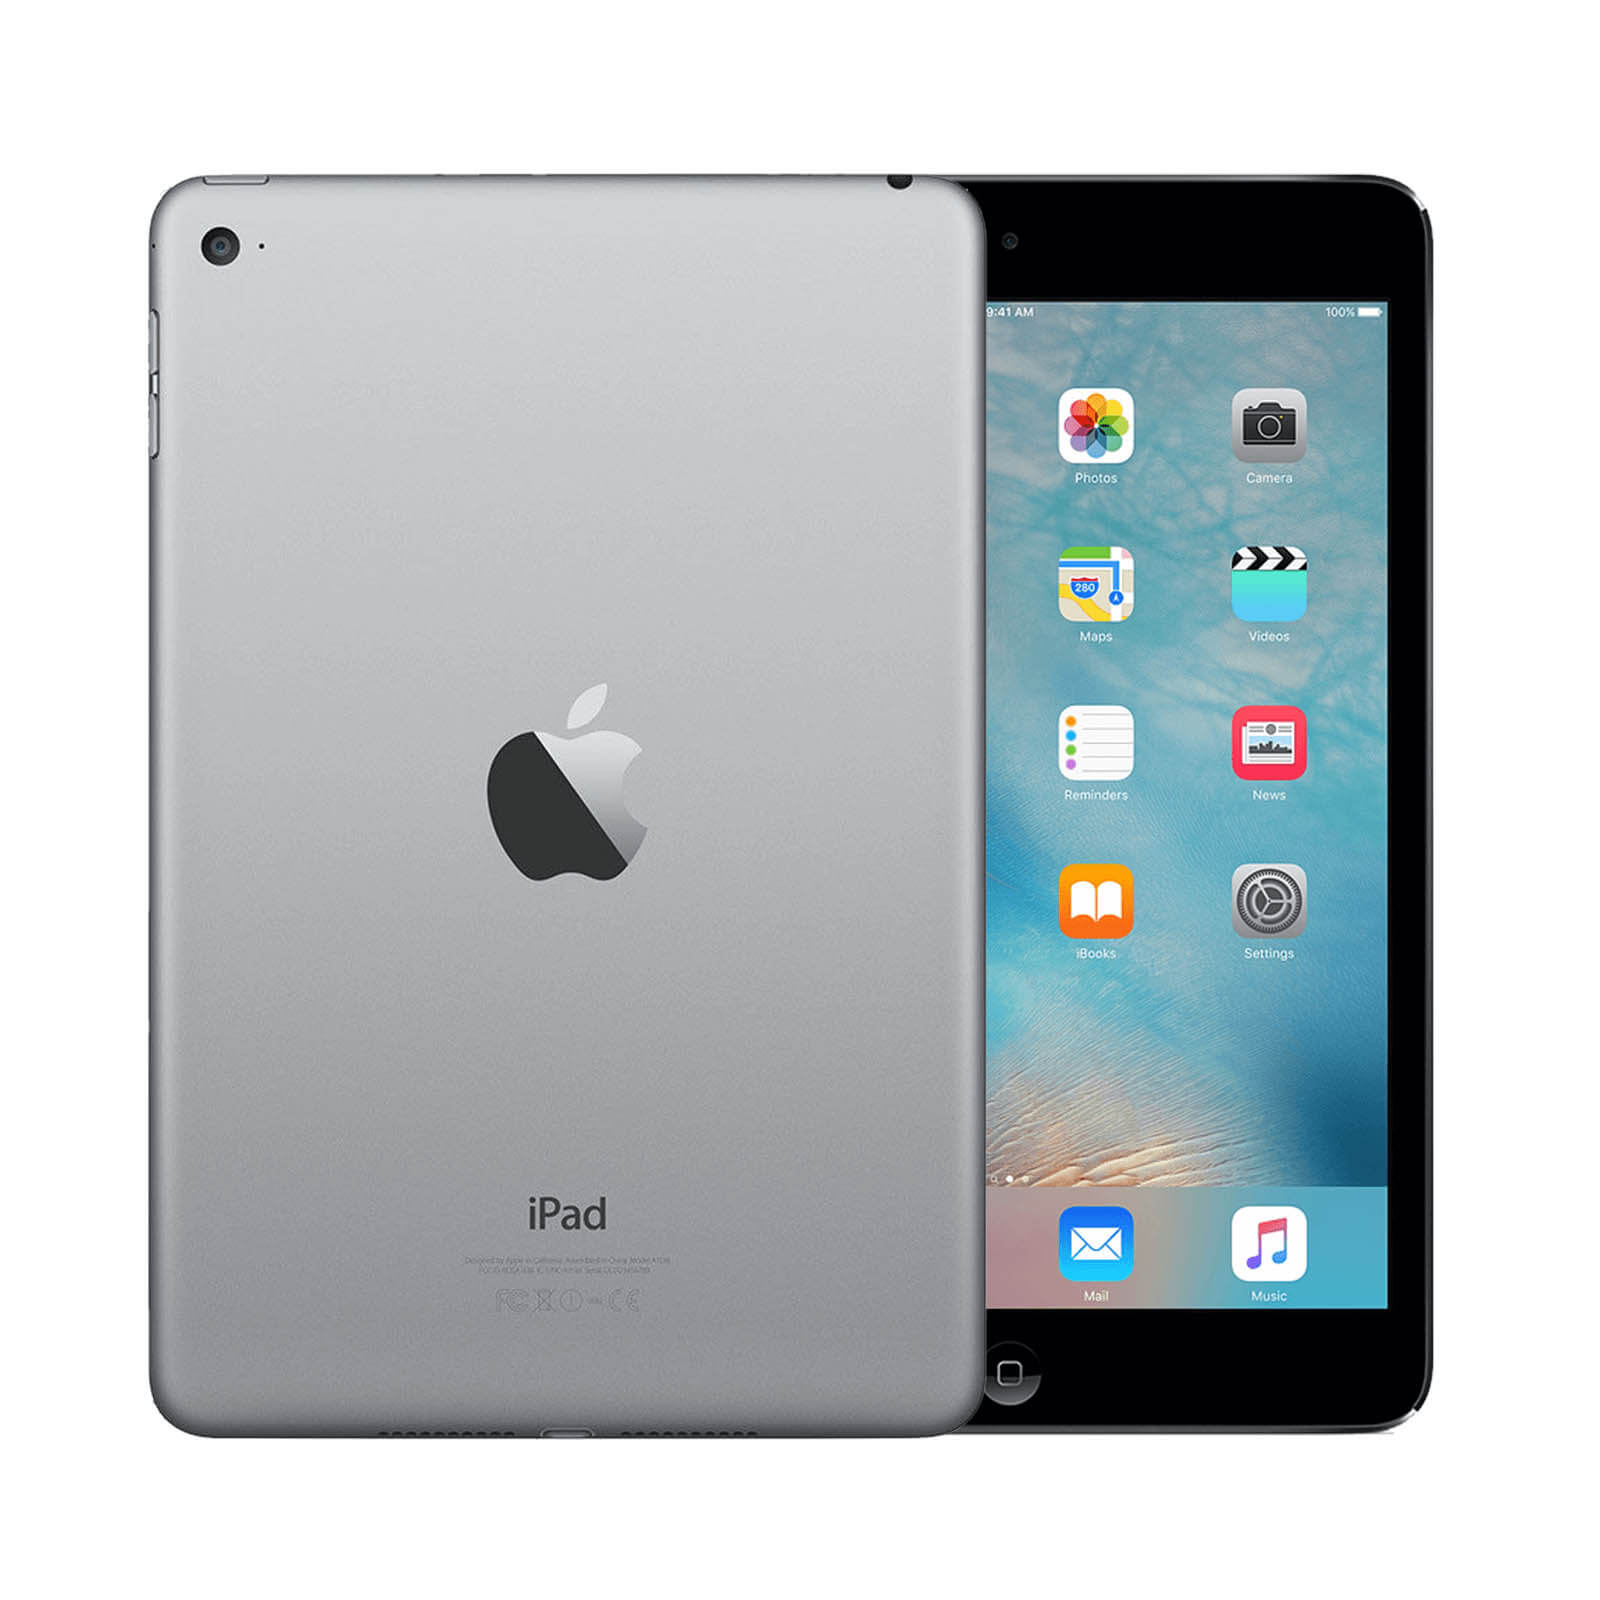 Apple iPad Mini 4 16GB Space Grey WiFi - Pristine 16GB Space Grey Pristine